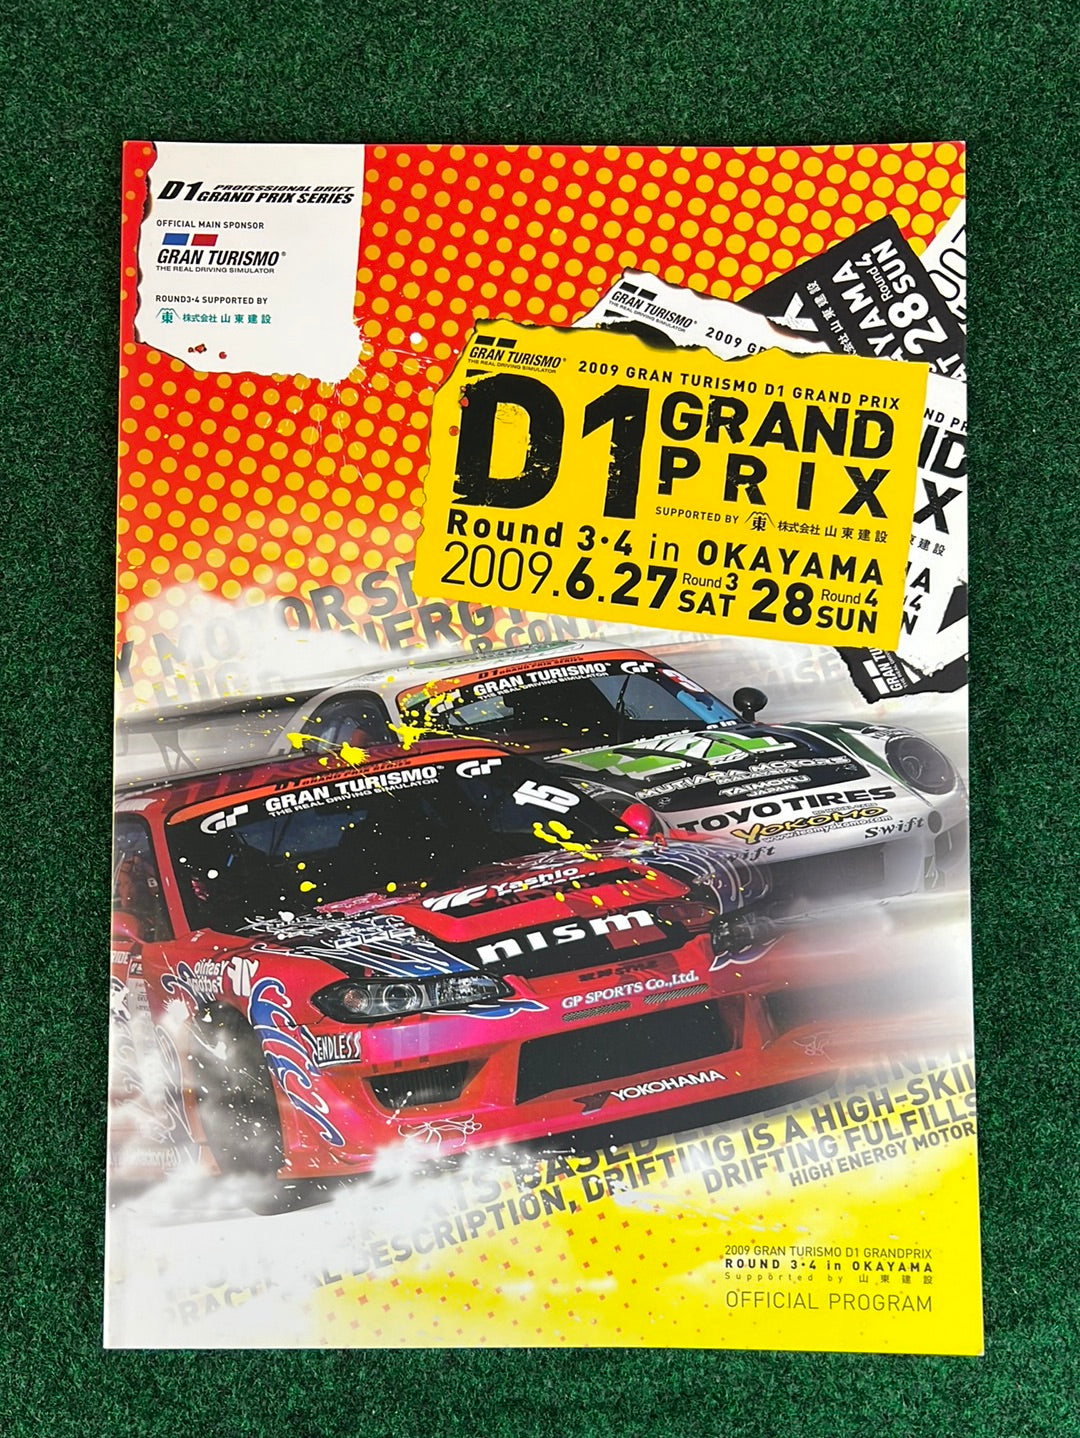 D1 GRAND PRIX 2009 Round 3 & 4 in Okayama Official Program